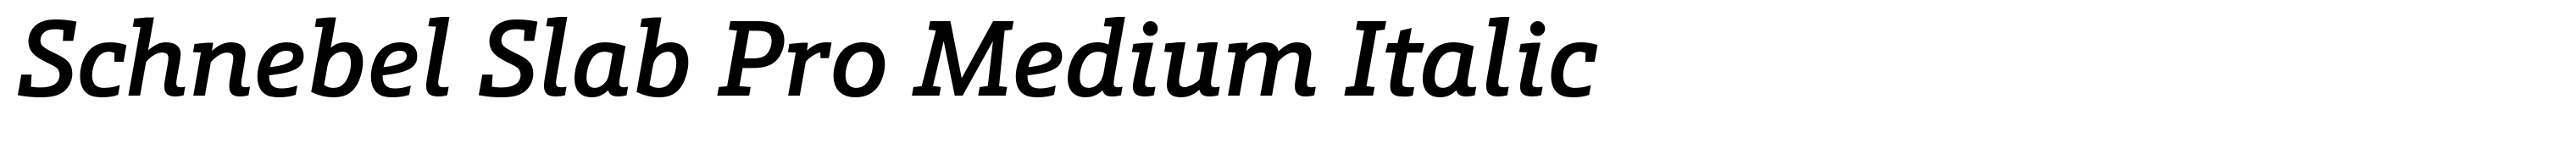 Schnebel Slab Pro Medium Italic